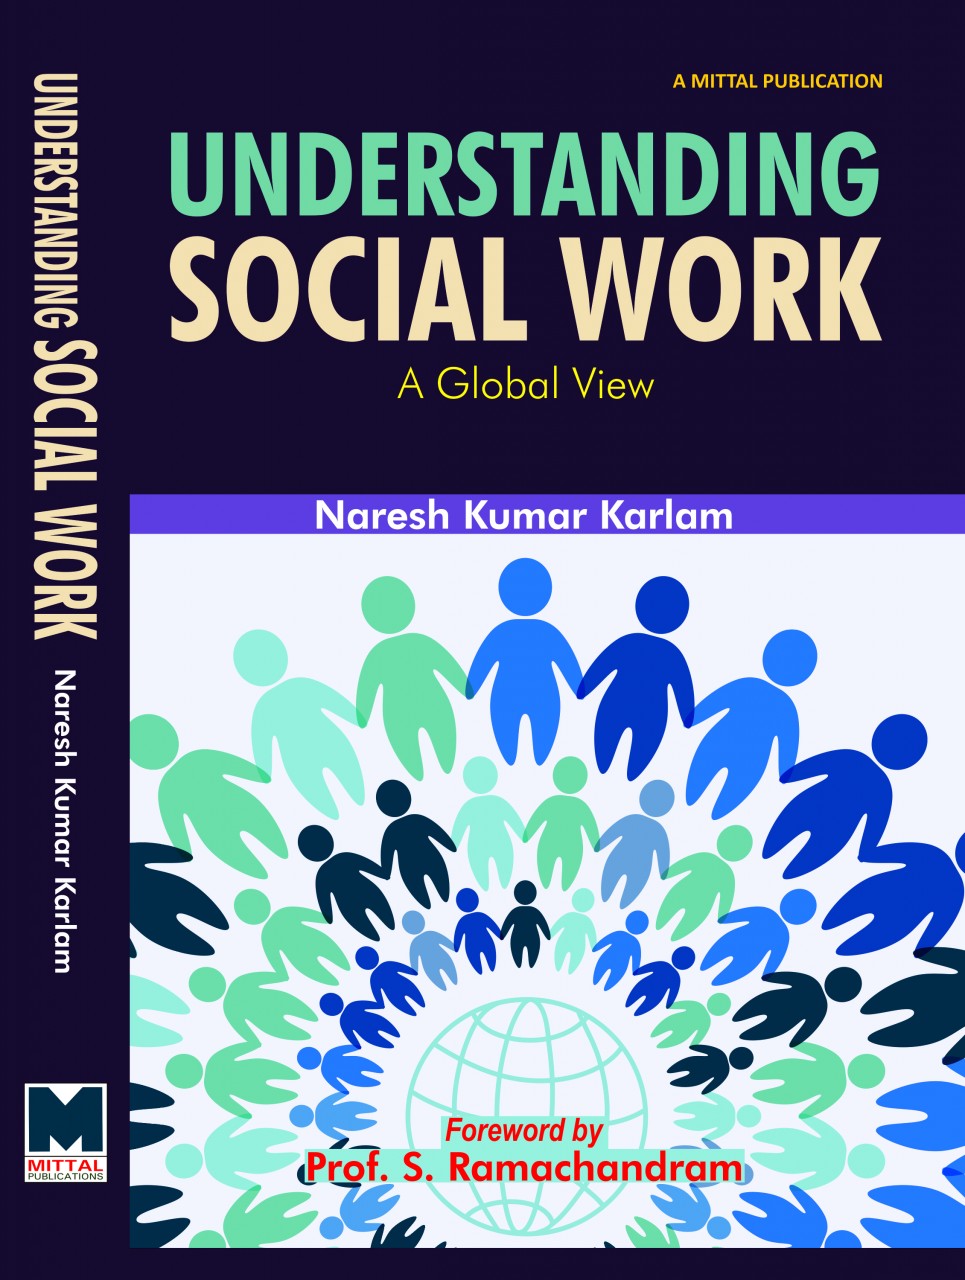 Understanding Social Work: A Global View by Naresh Kumar Karlam Foreword by Prof. S. Ramachandram